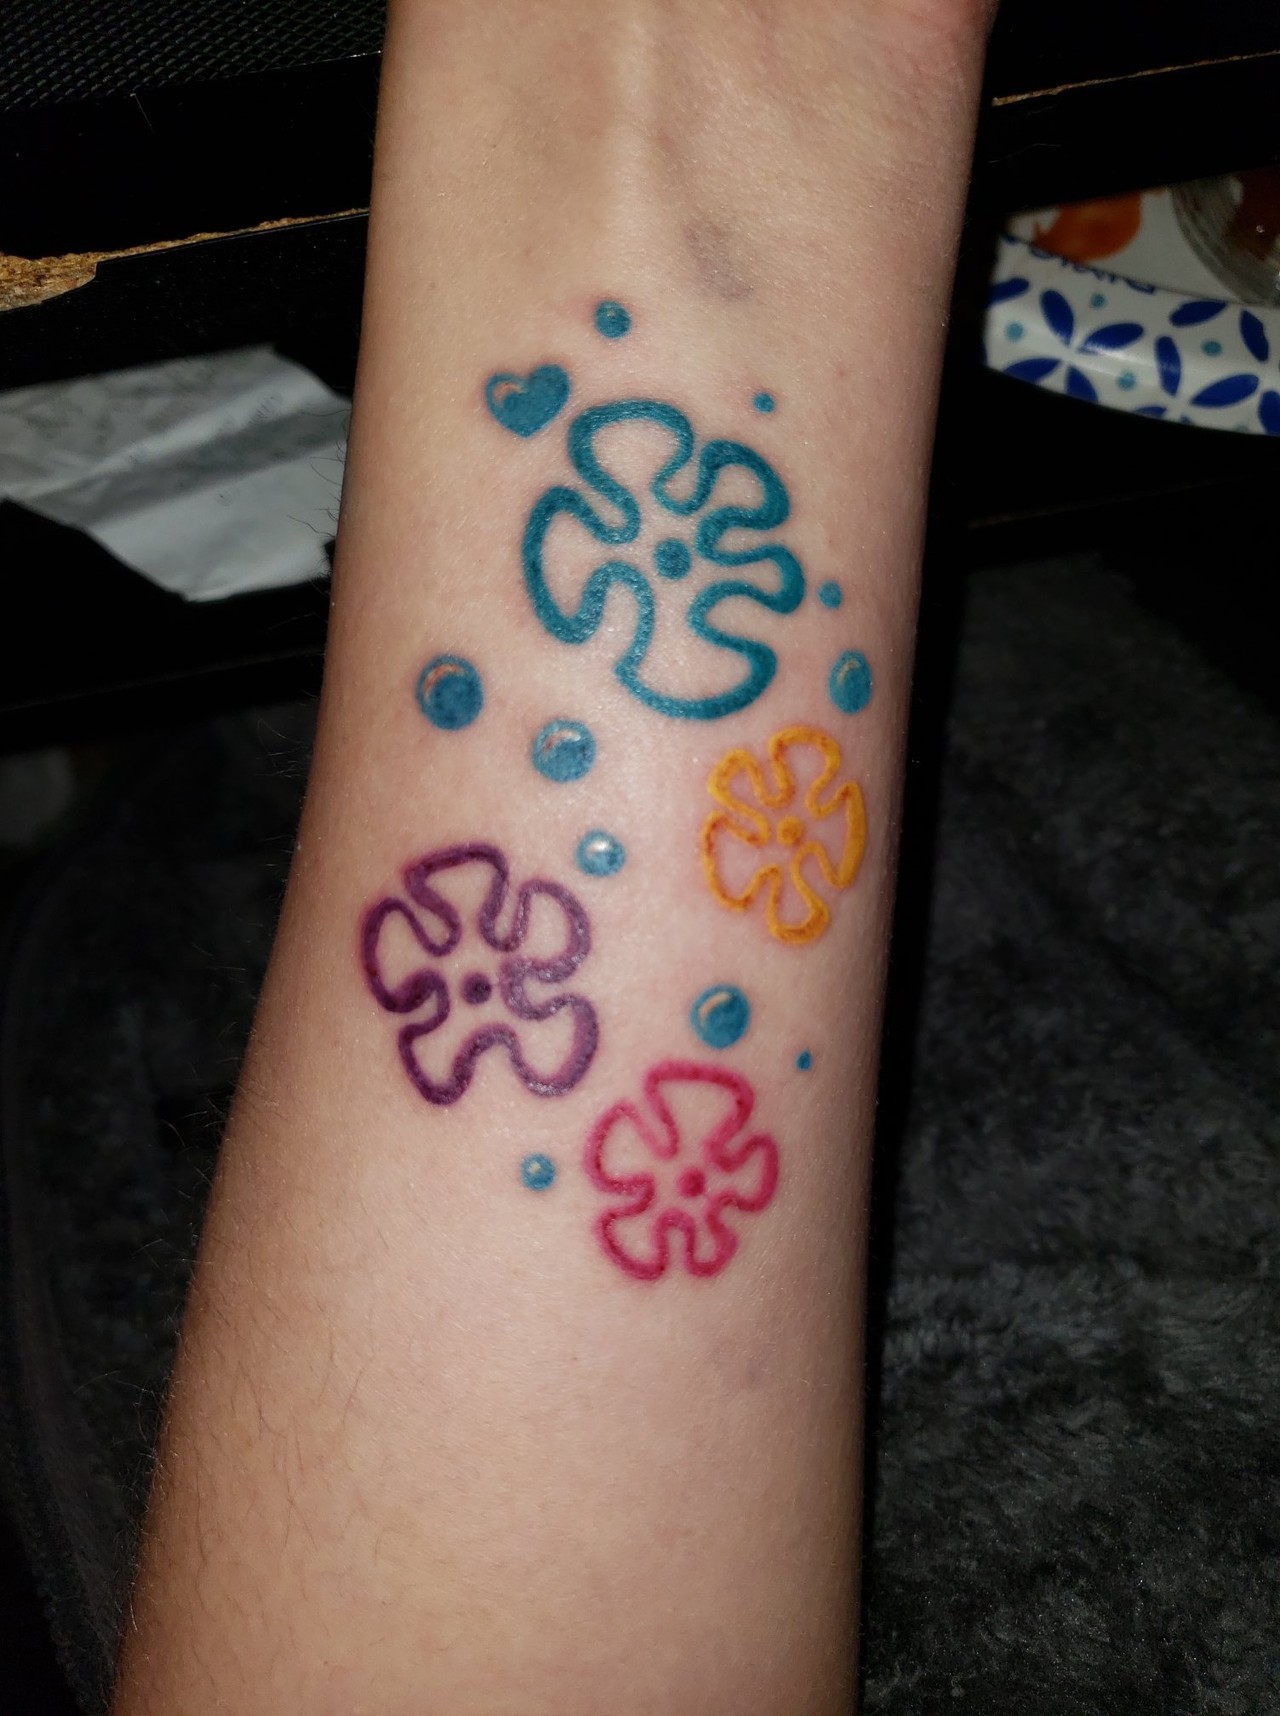 spongebob for life thanks taylor at ink rush in temple georgia  tattoos   Discreet tattoos Small tattoos Matching tattoos